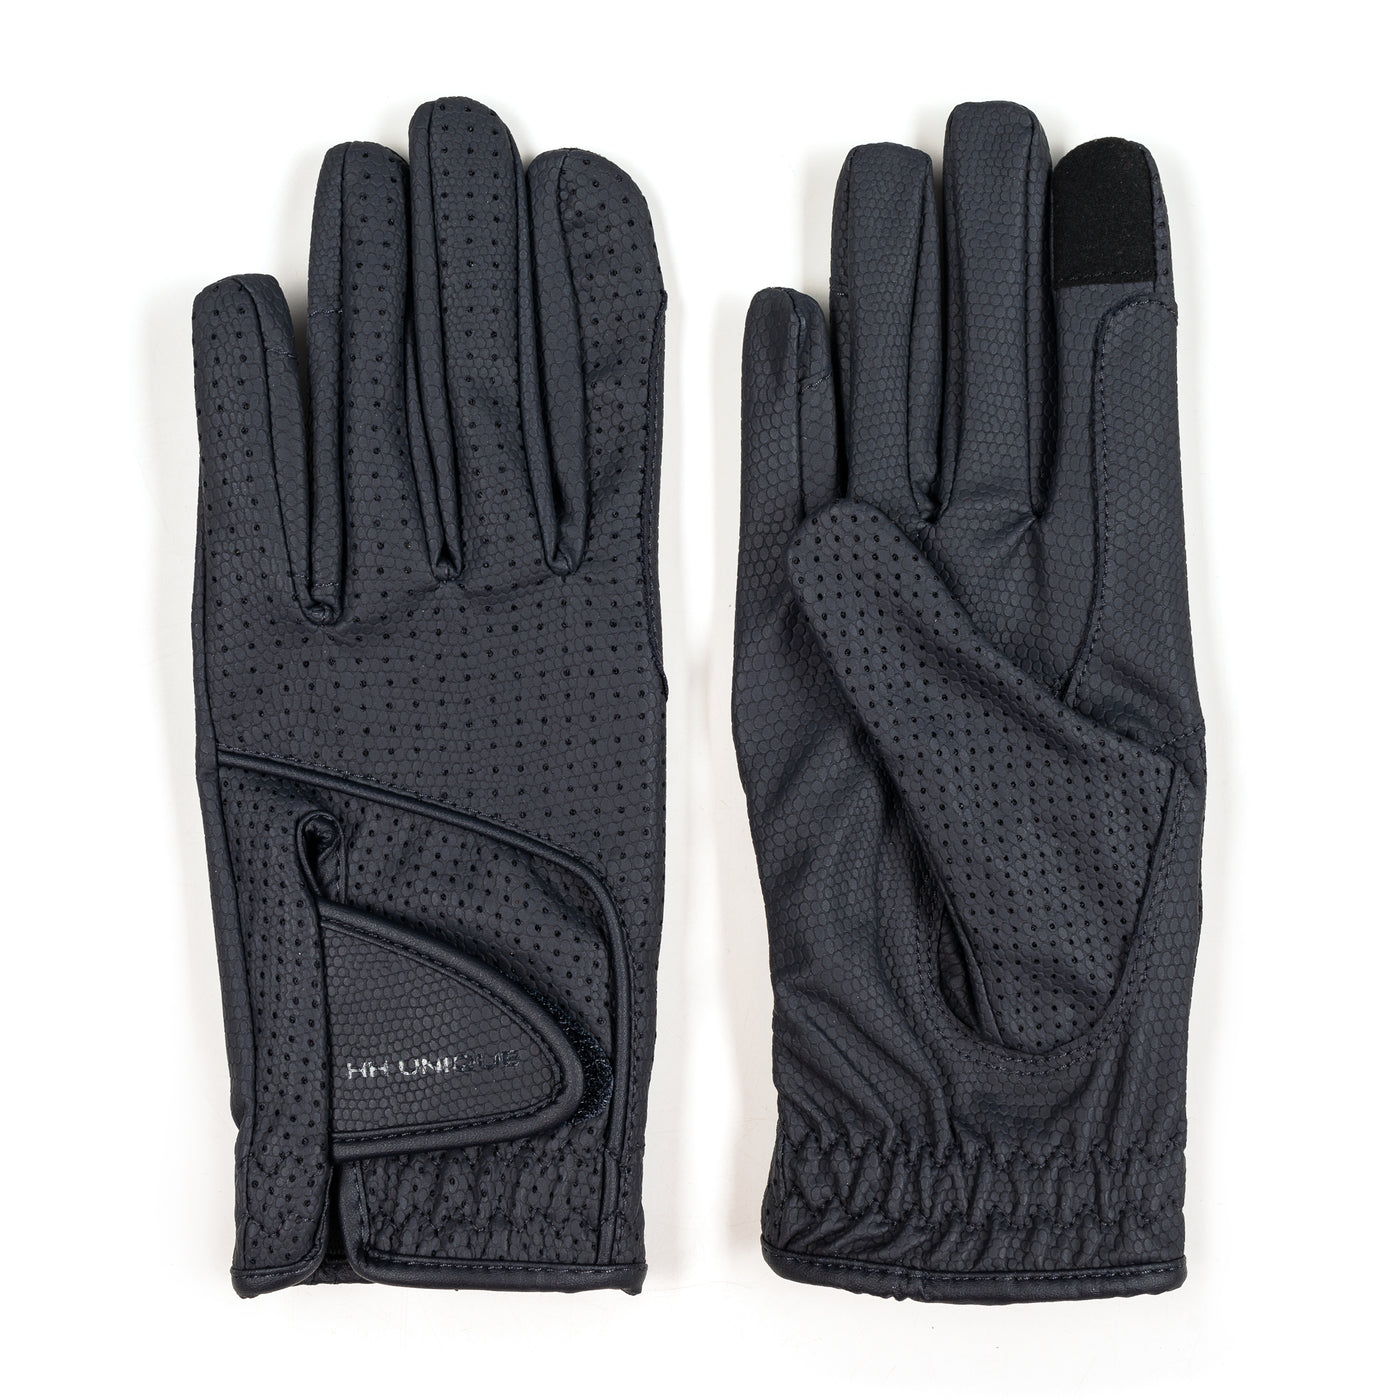 All Navy Air2 Gloves